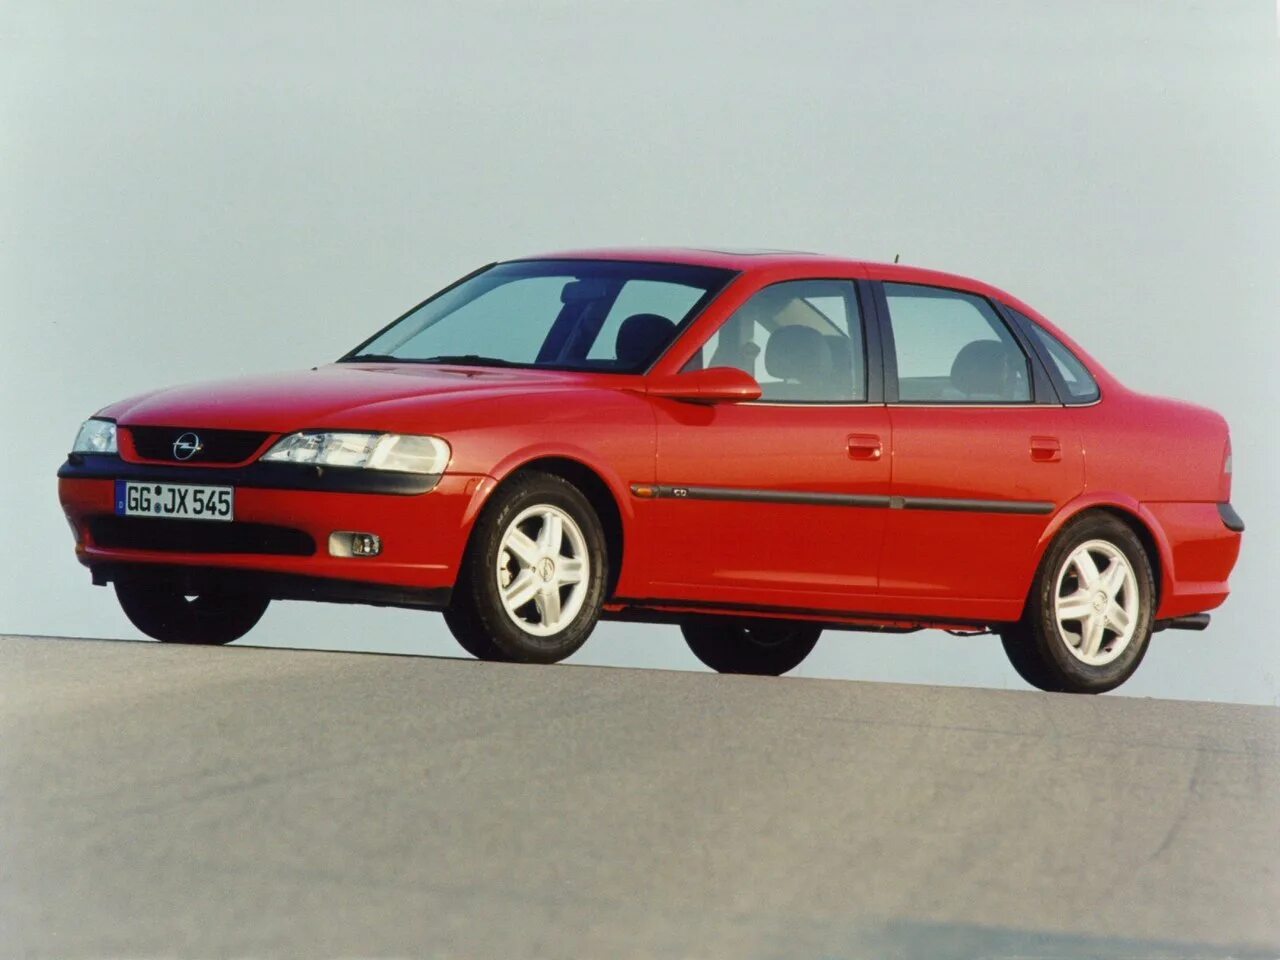 Opel Vectra b. Opel Vectra 1999 седан. Opel Vectra b 1995 - 2000 седан. Опель Вектра 1995 седан. Автомобиль опель вектра б